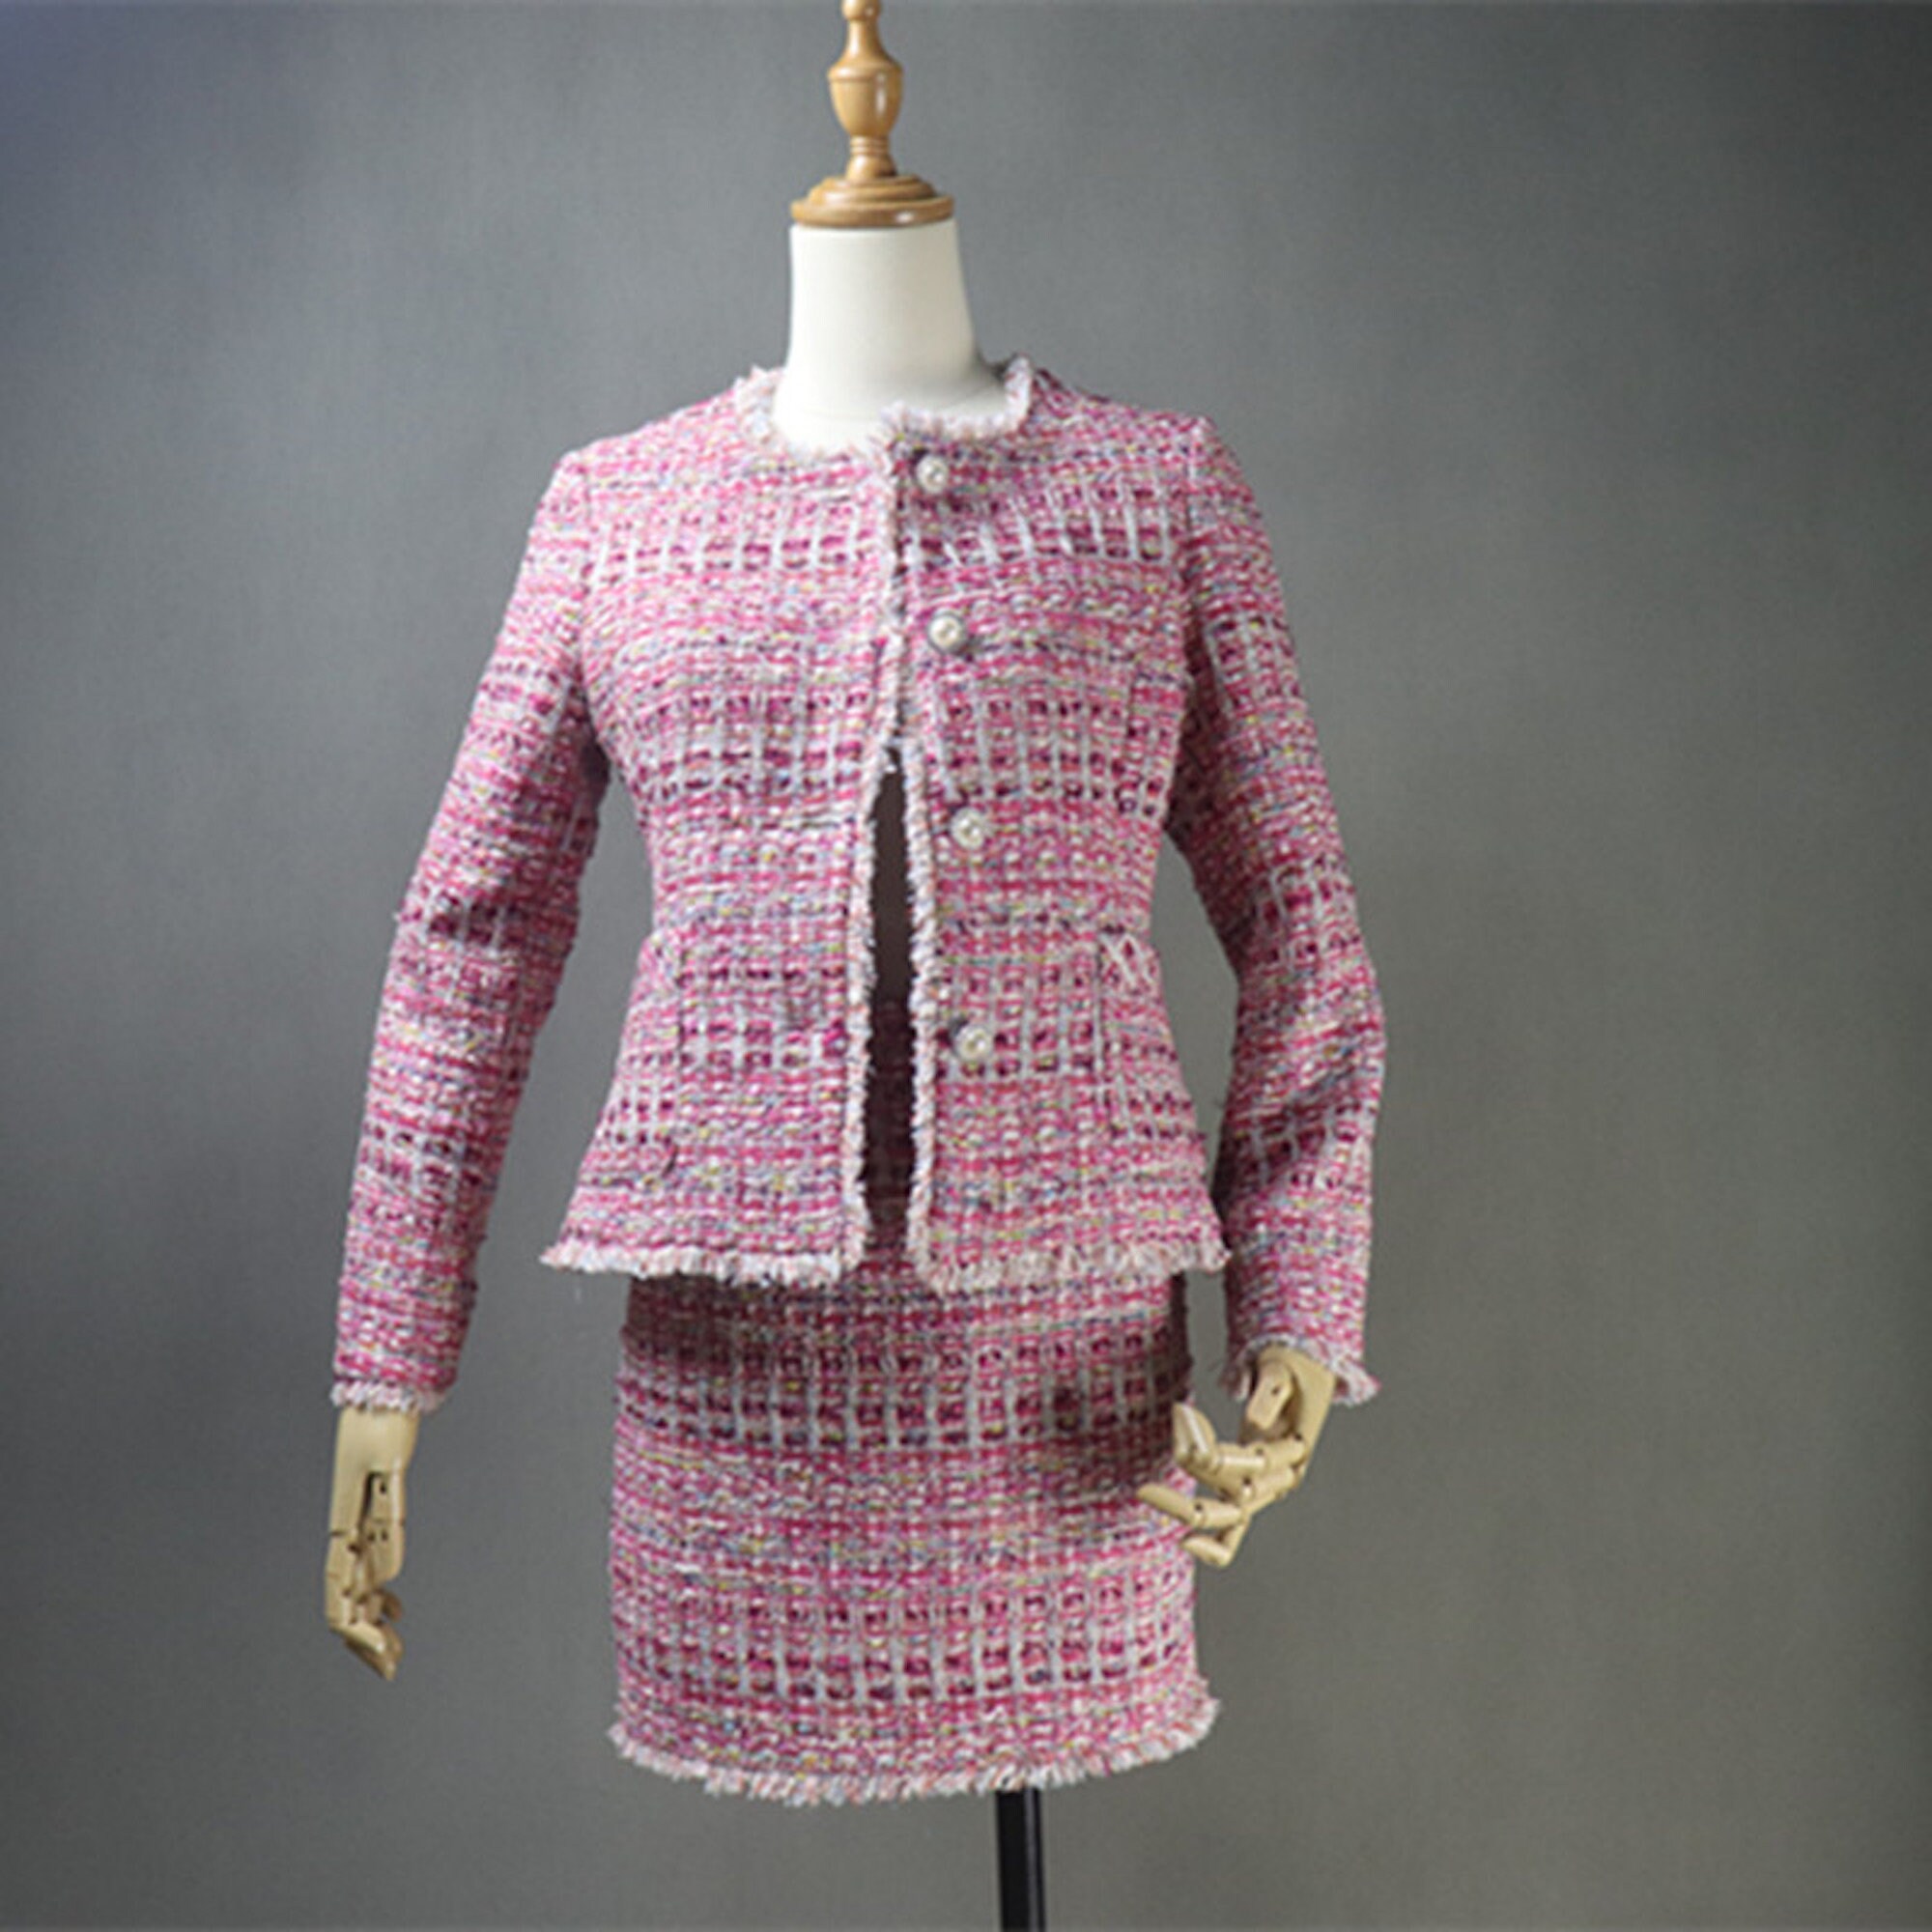 Fashionpioneer15 Womens Custom Made Multicolor Pink Tweed Blazer + Skirt/Shorts Suit Pink Suit Formal Suit